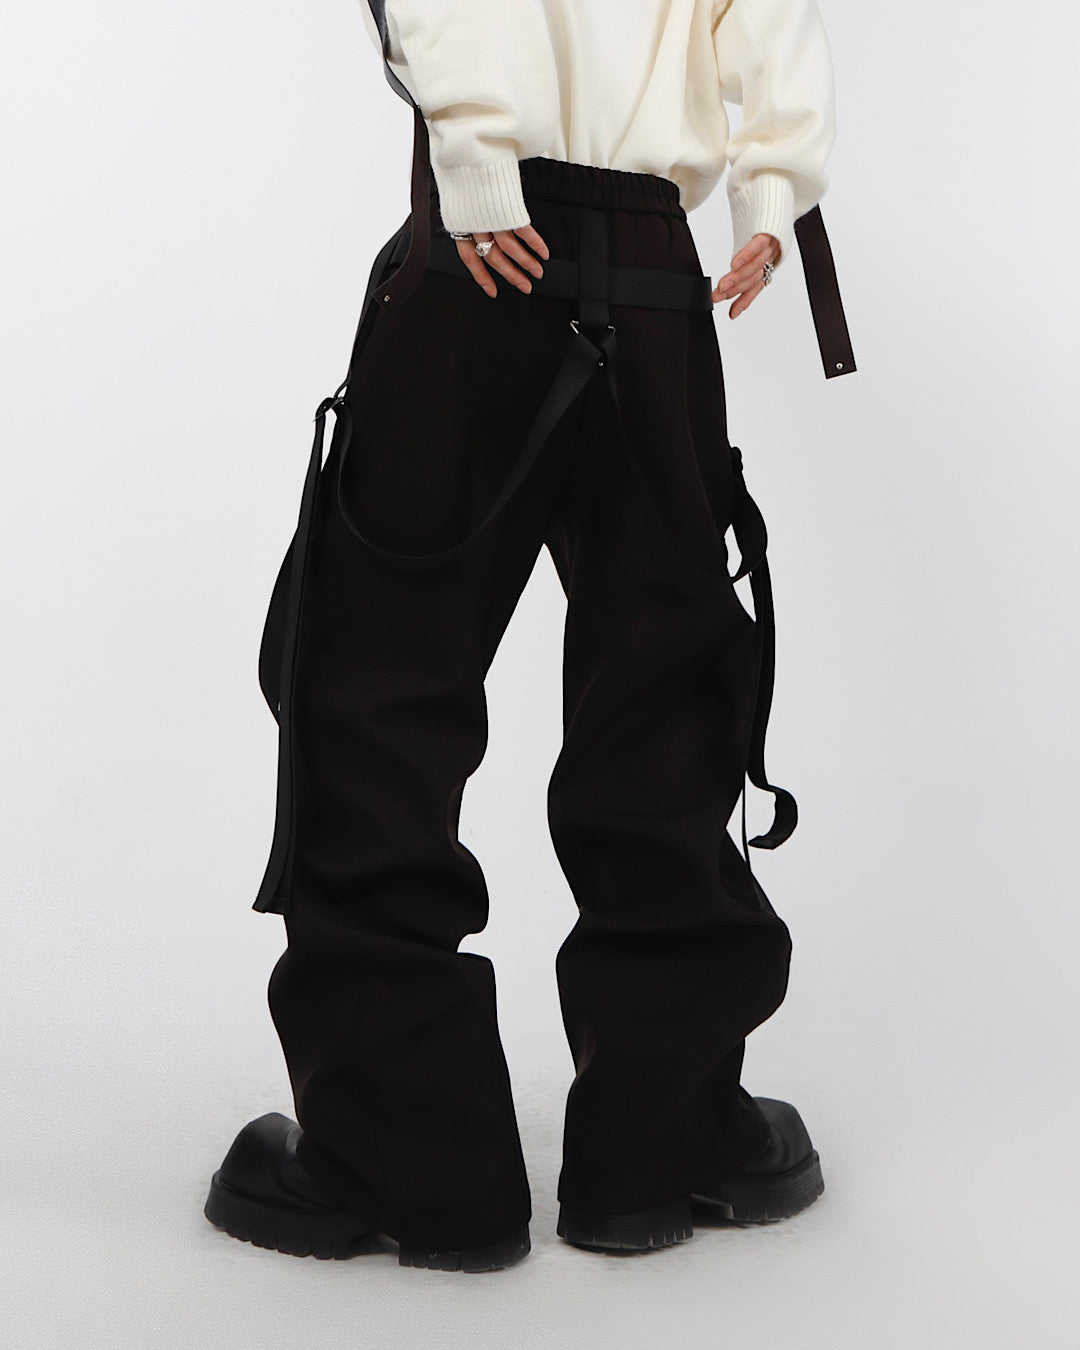 【Culture E】Suspender longlens over pants  CE0033